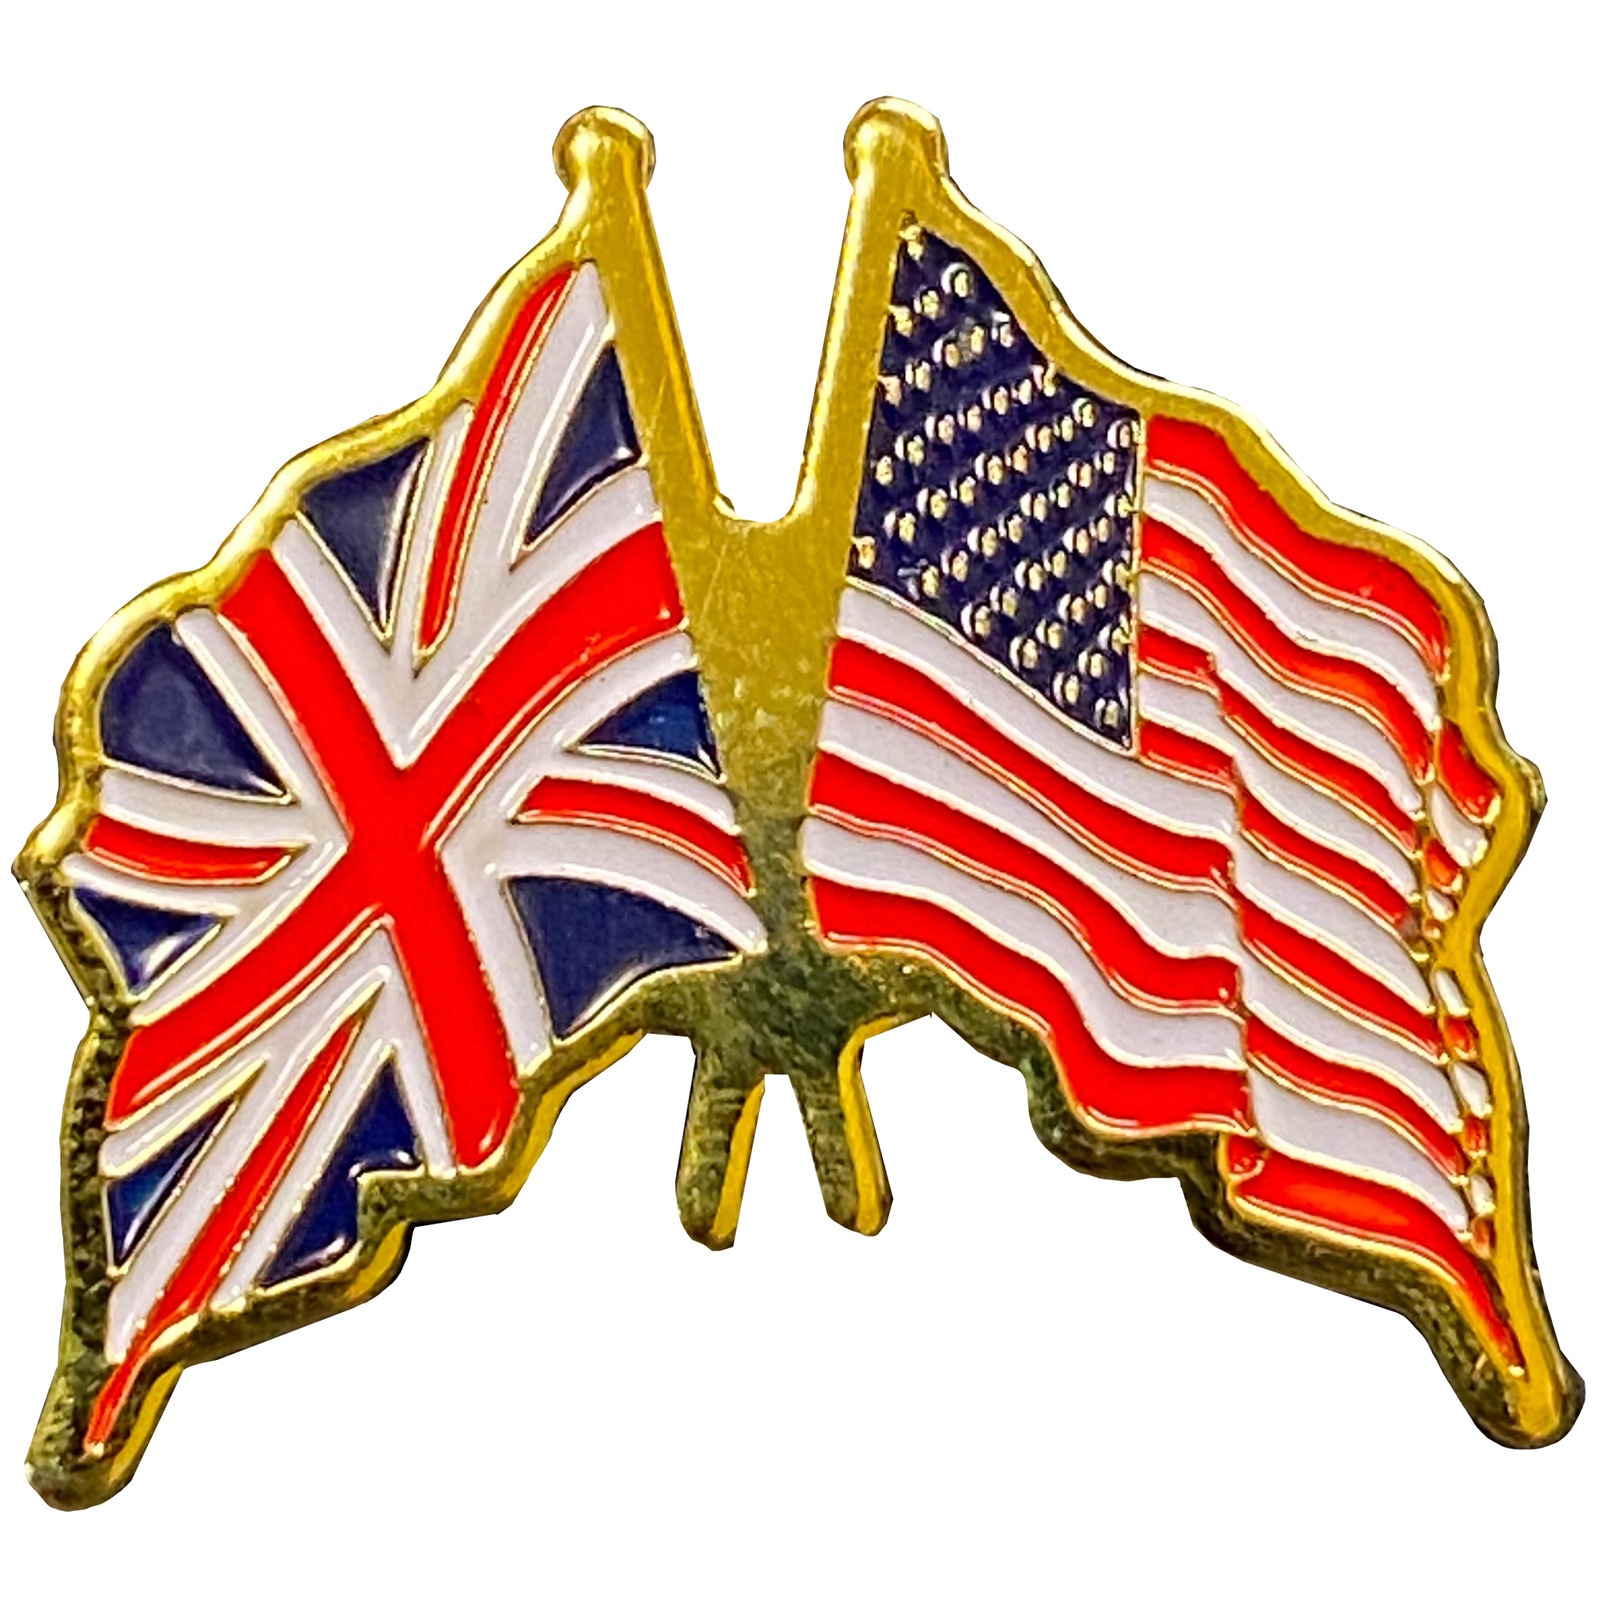 M-27 UK and American Flag lapel pin USA UK British England Crossed Flags